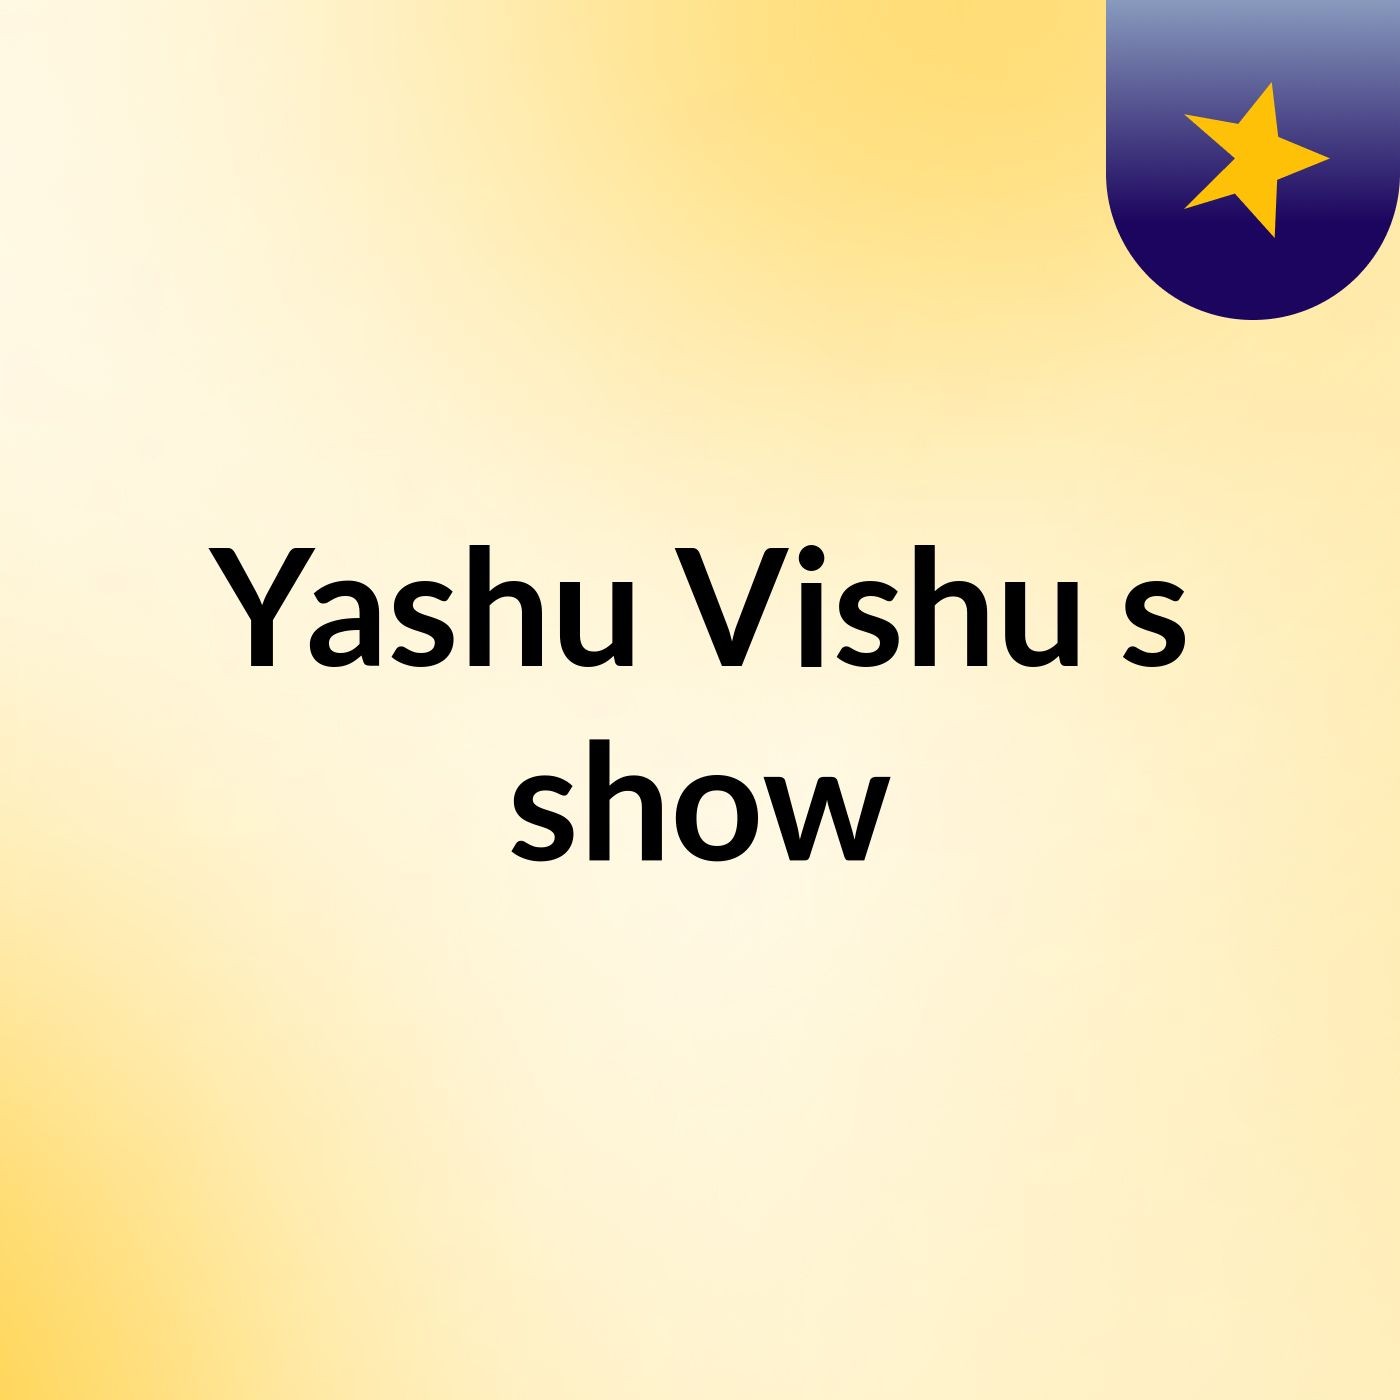 Yashu Vishu's show